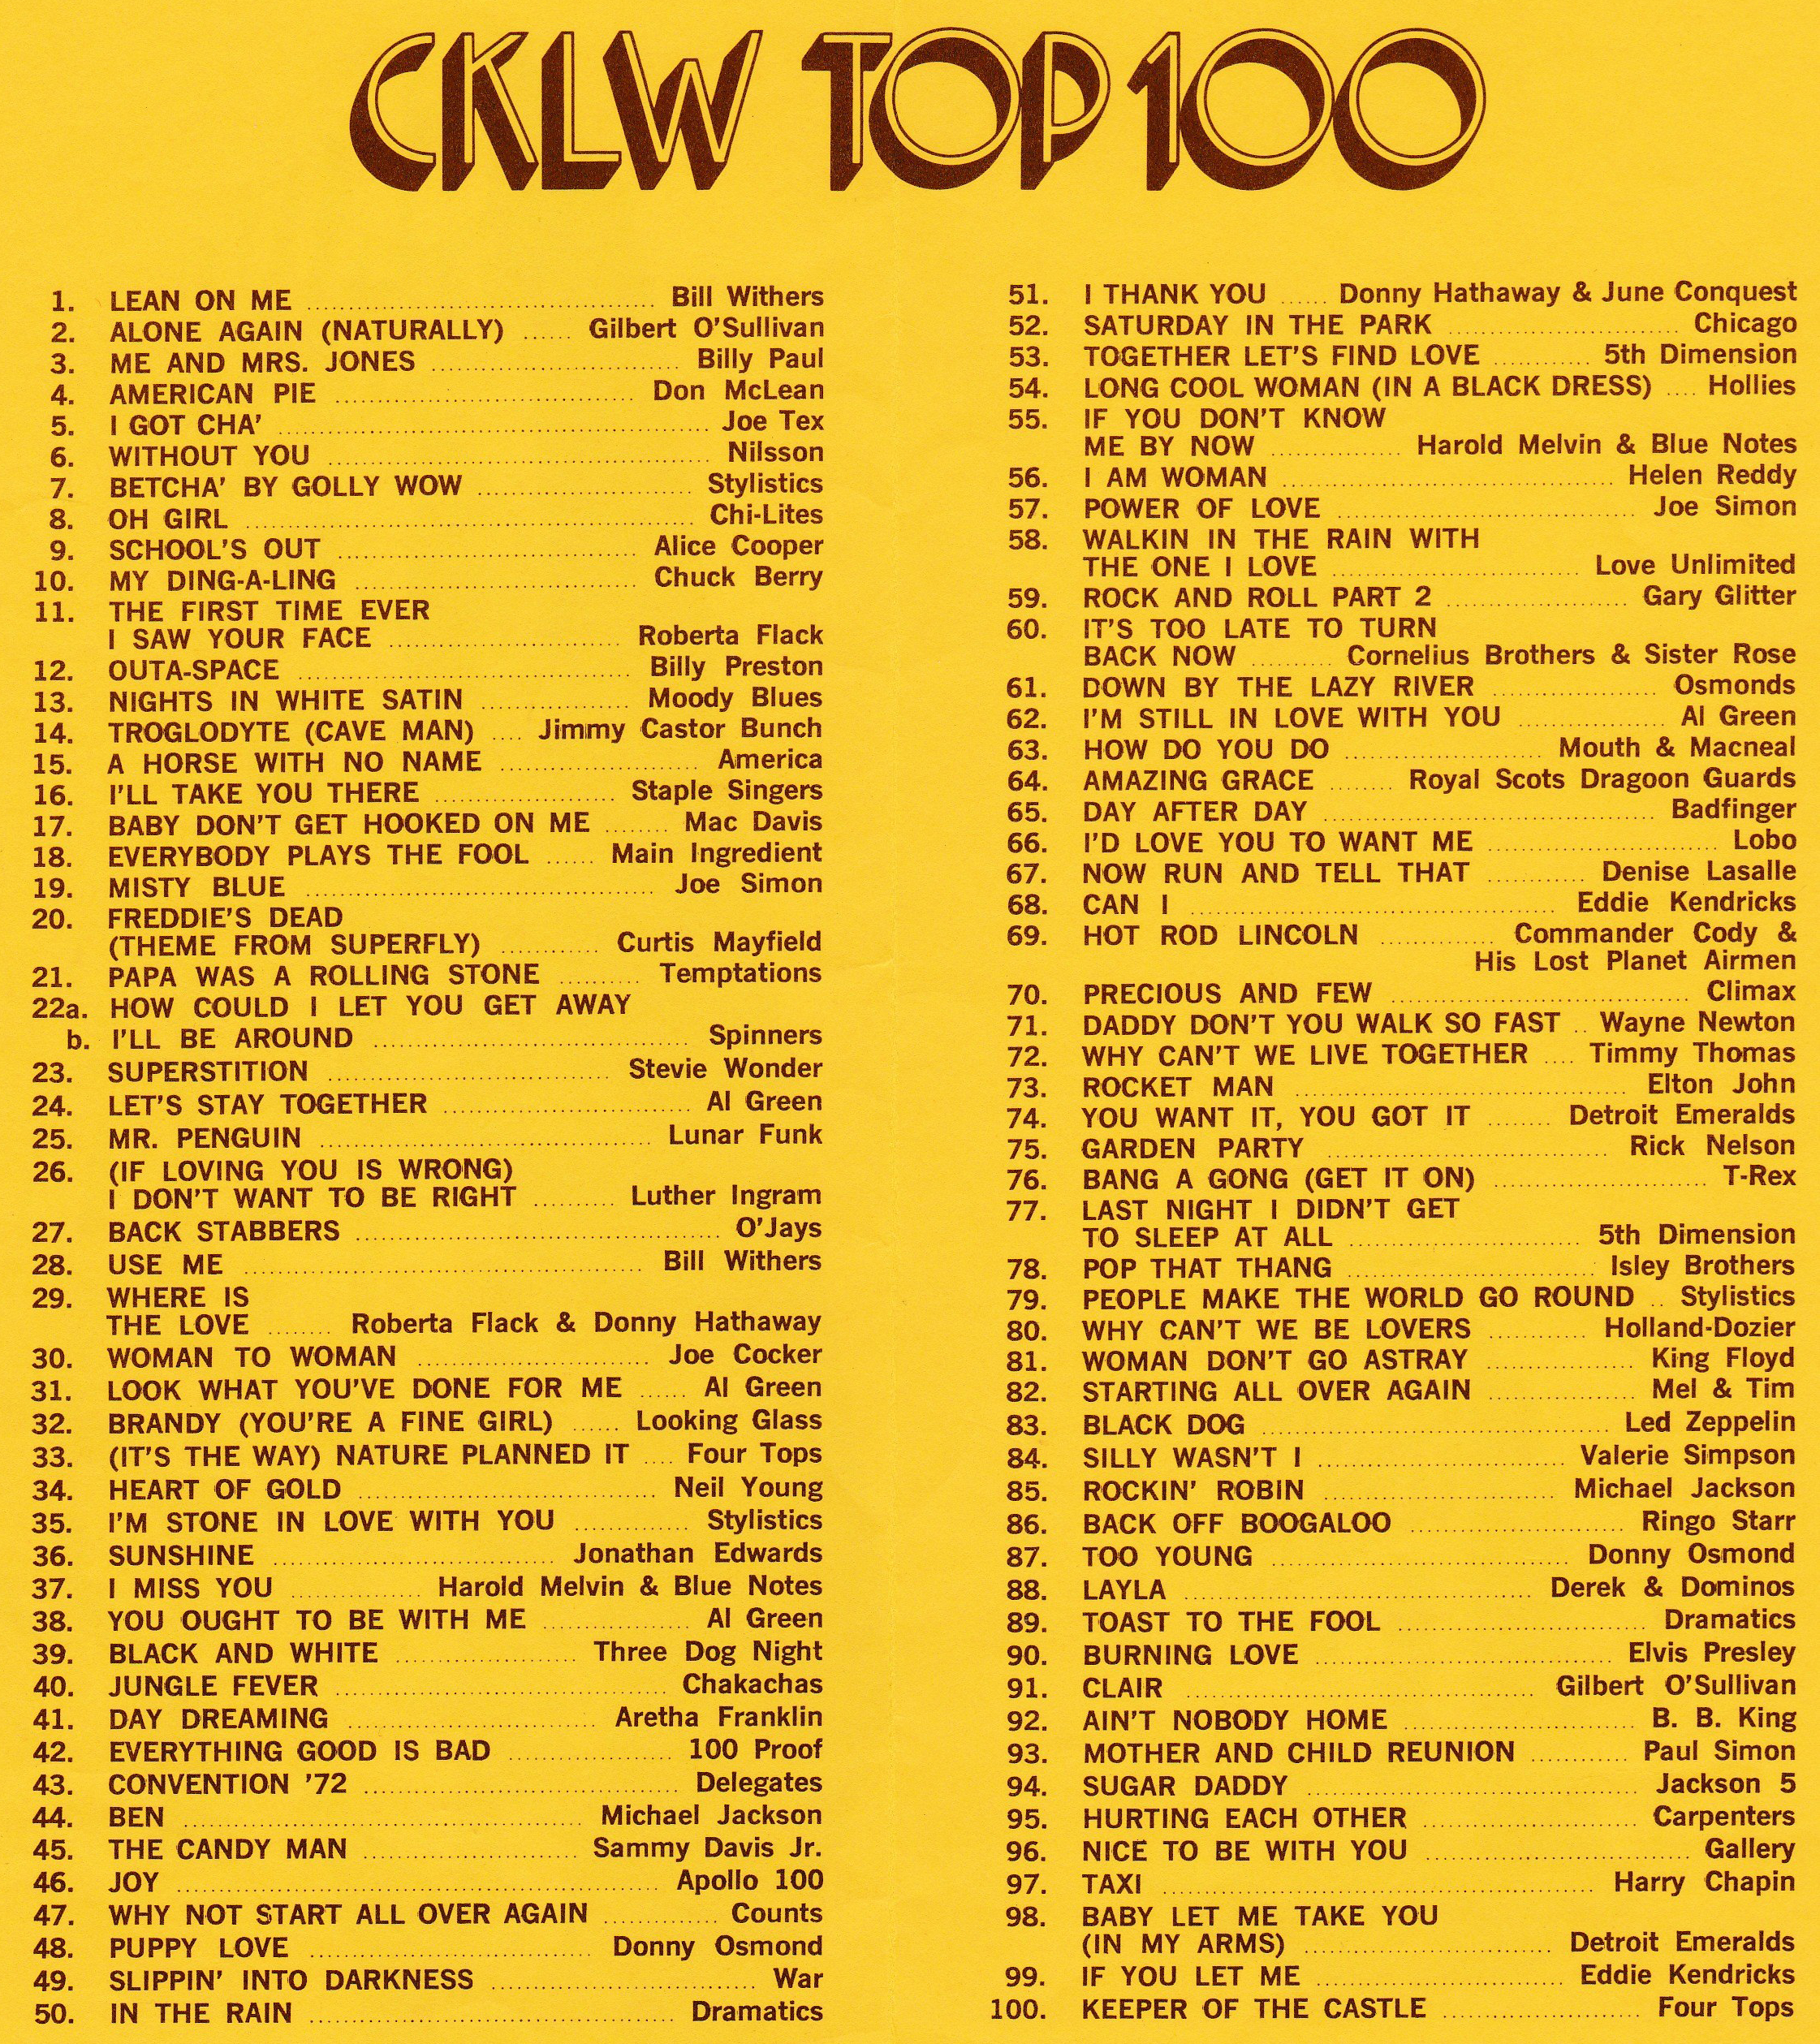 CKLW TOP 100 SURVEY FOR 1972